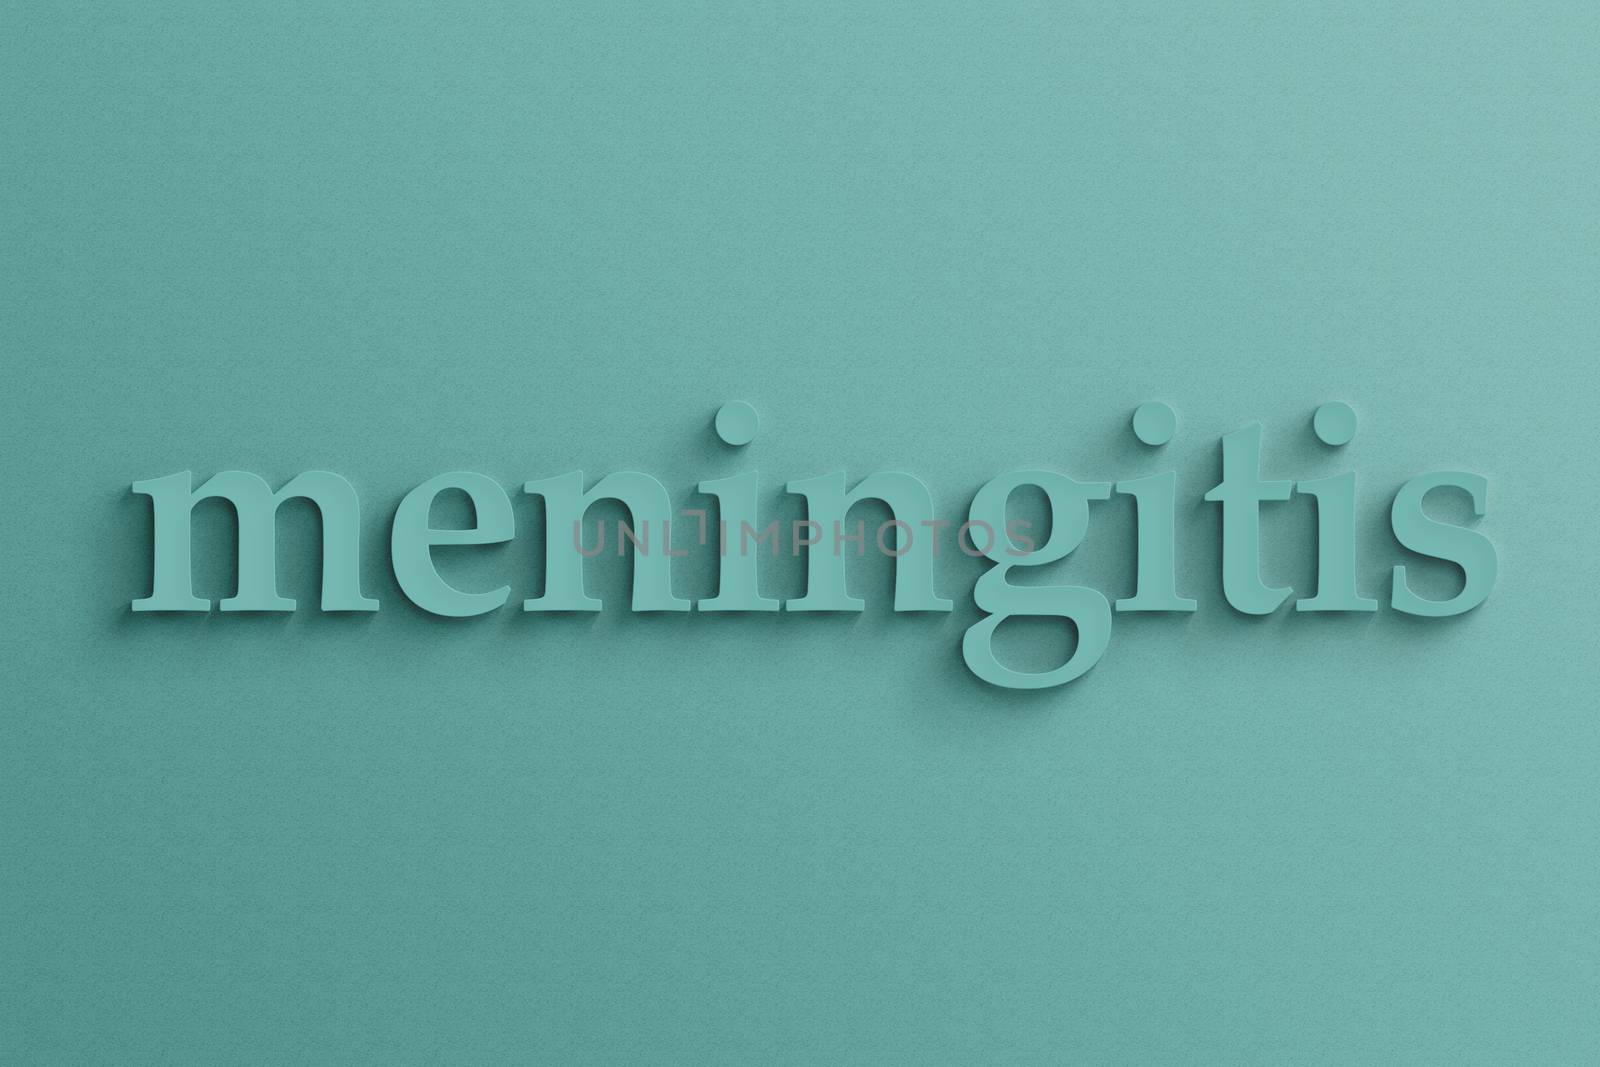 3D text with shadow on wall, meningitis .